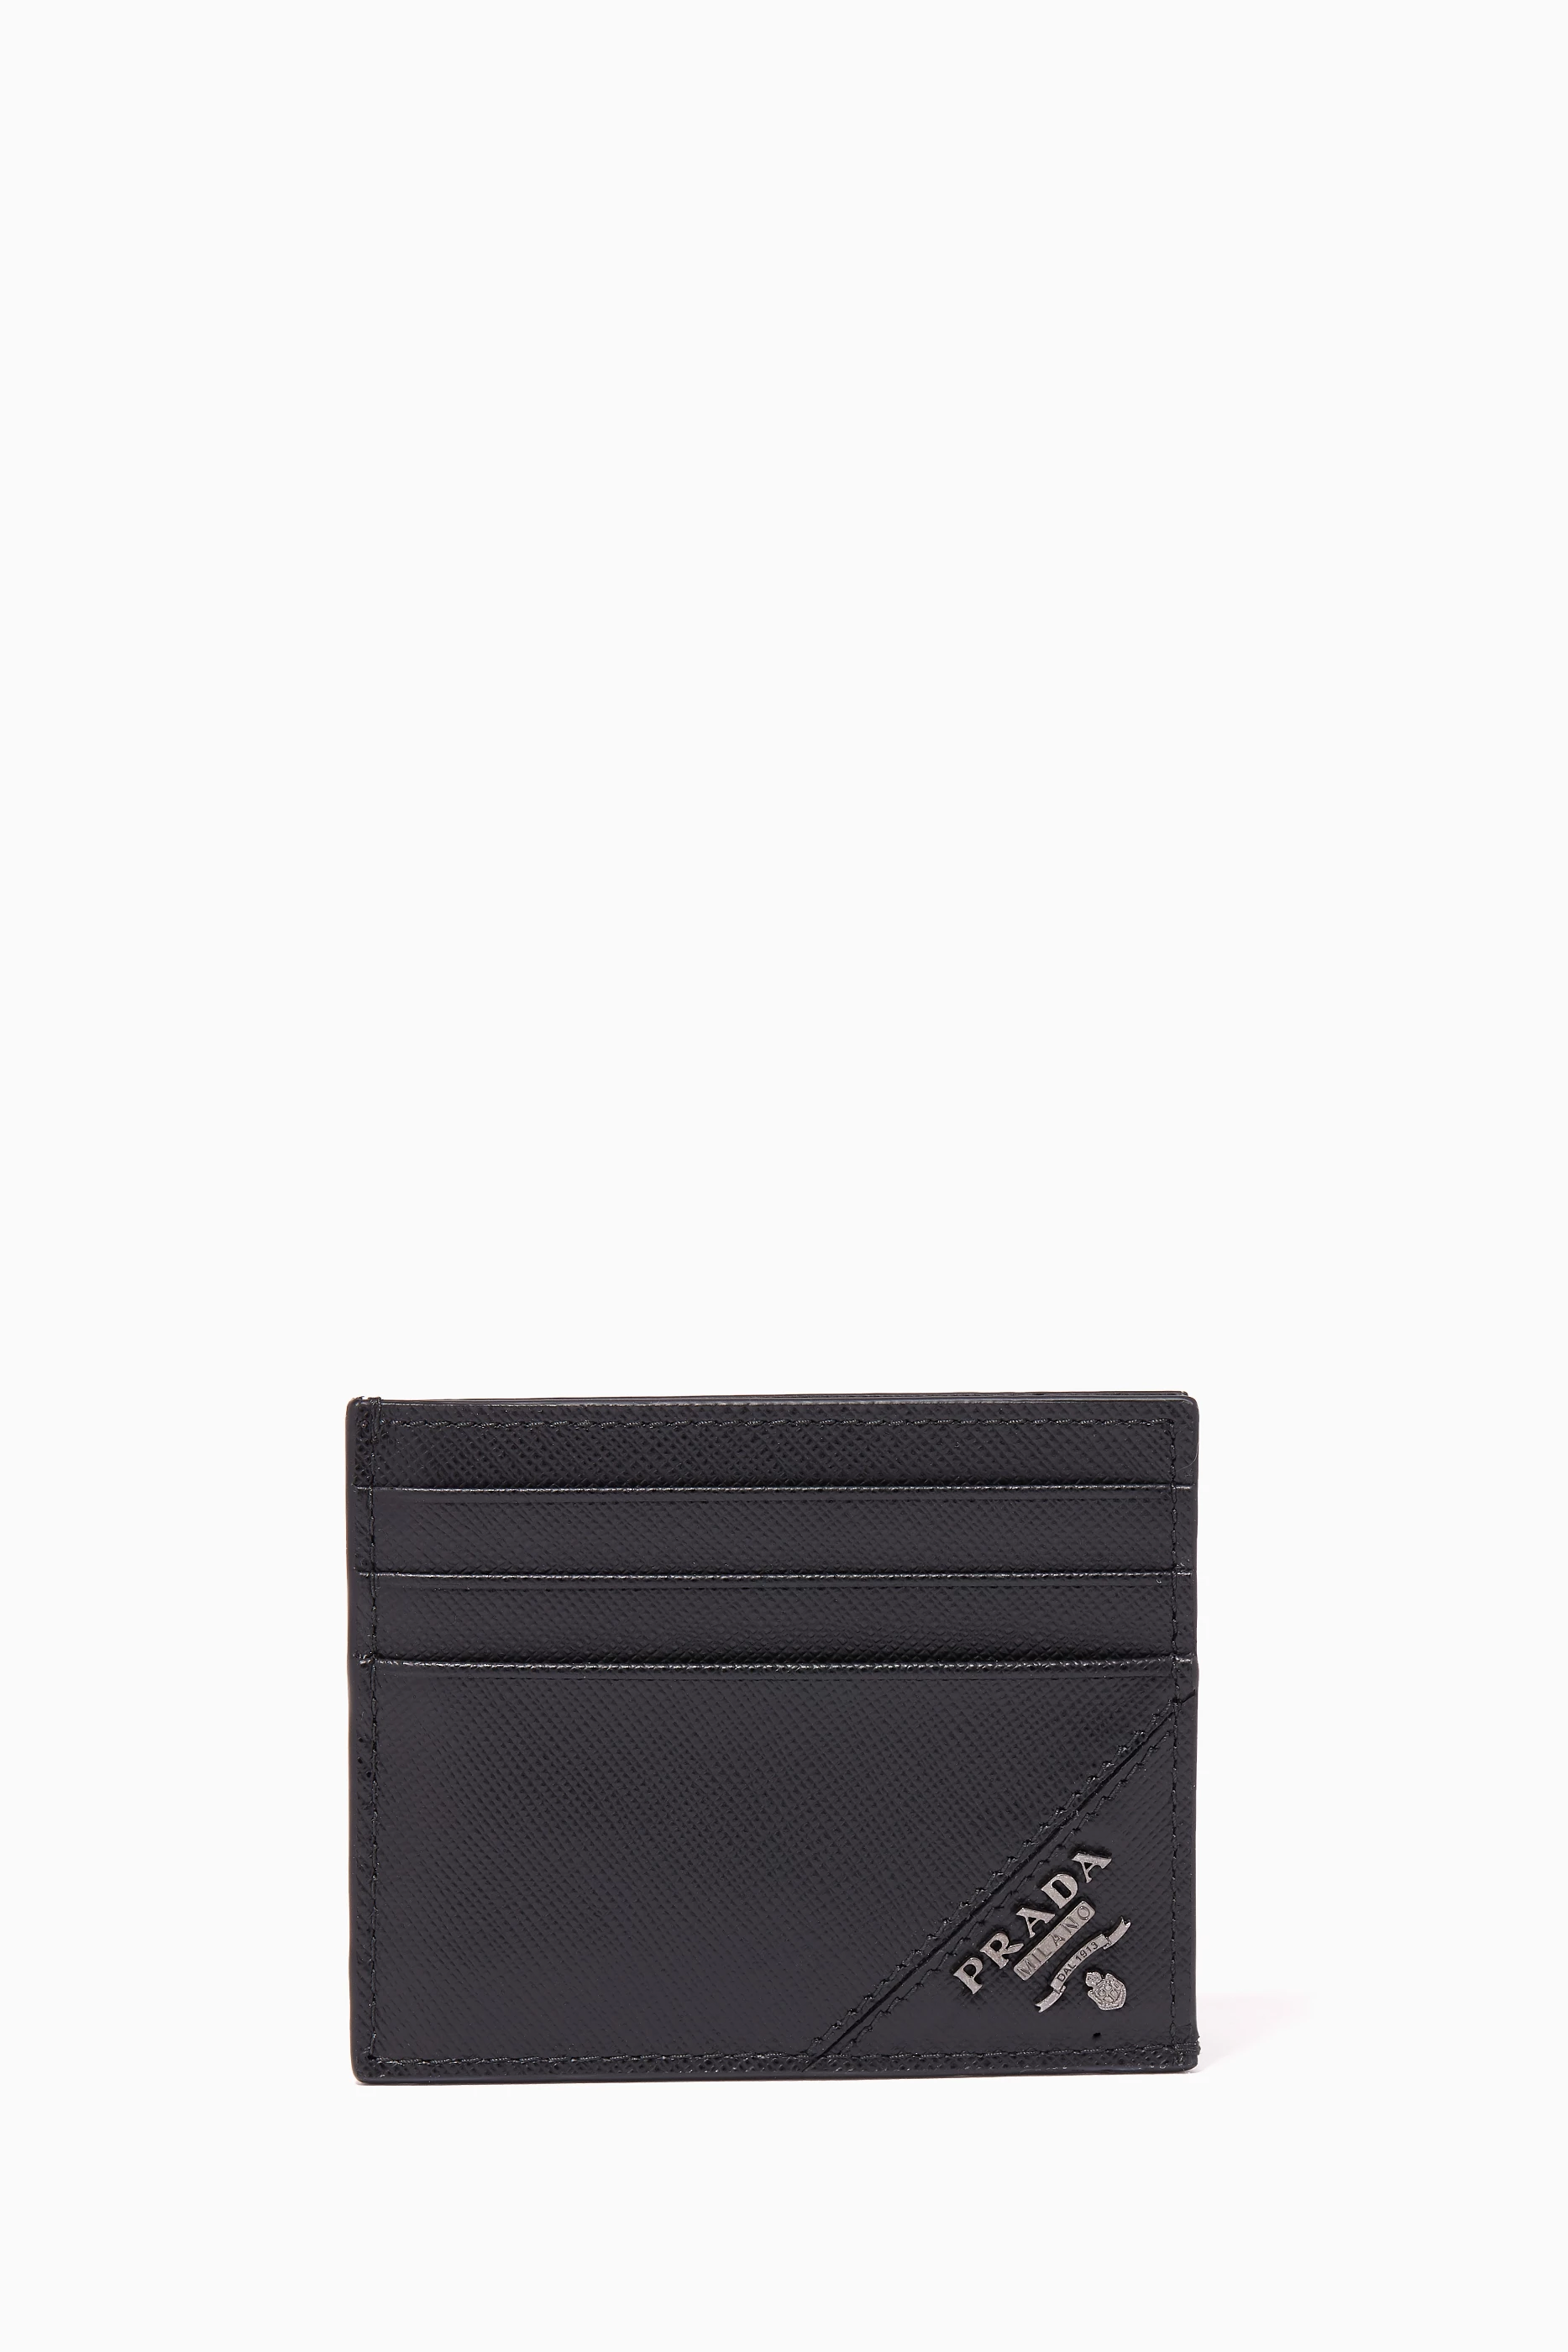 Saffiano Leather Card Holder in Black - Prada